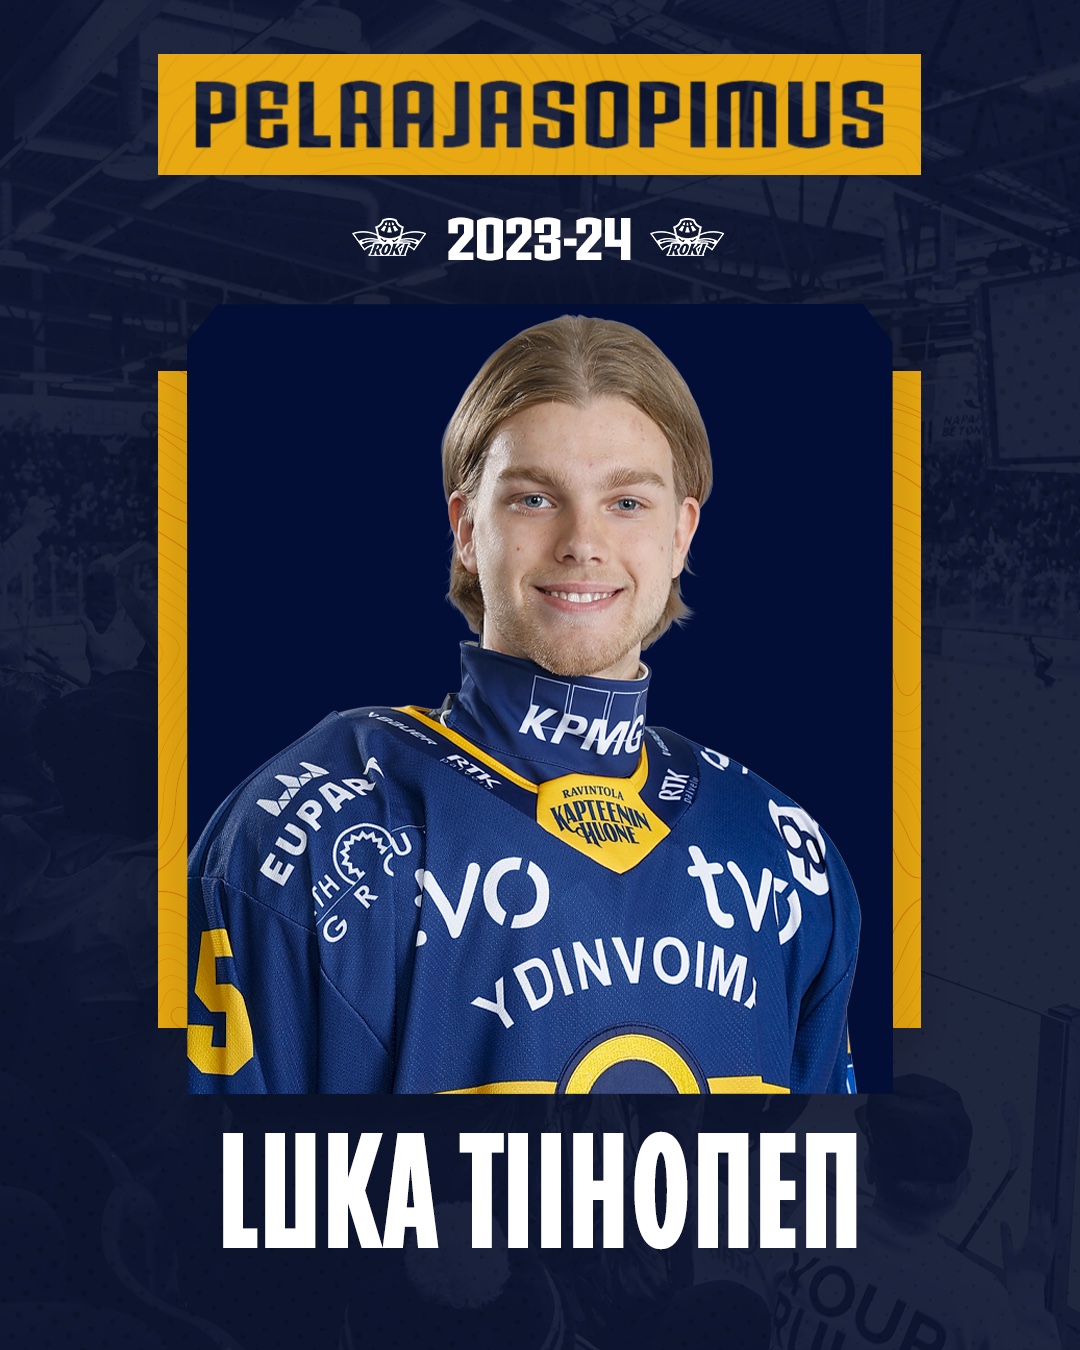 rokihockey.fi